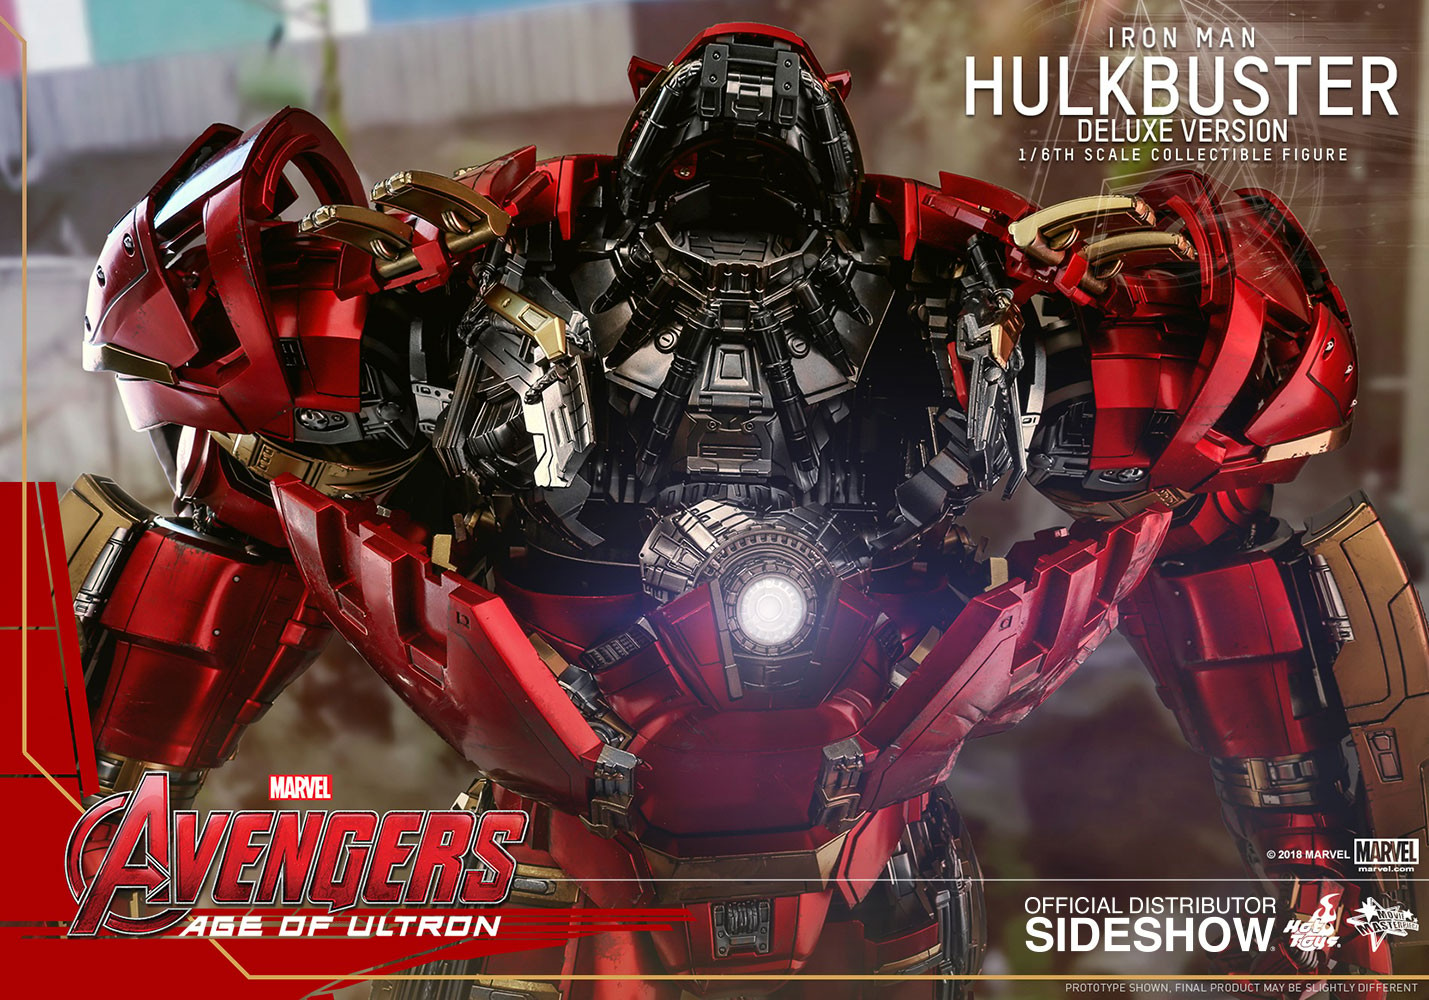 Hulkbuster Deluxe Version (Prototype Shown) View 6